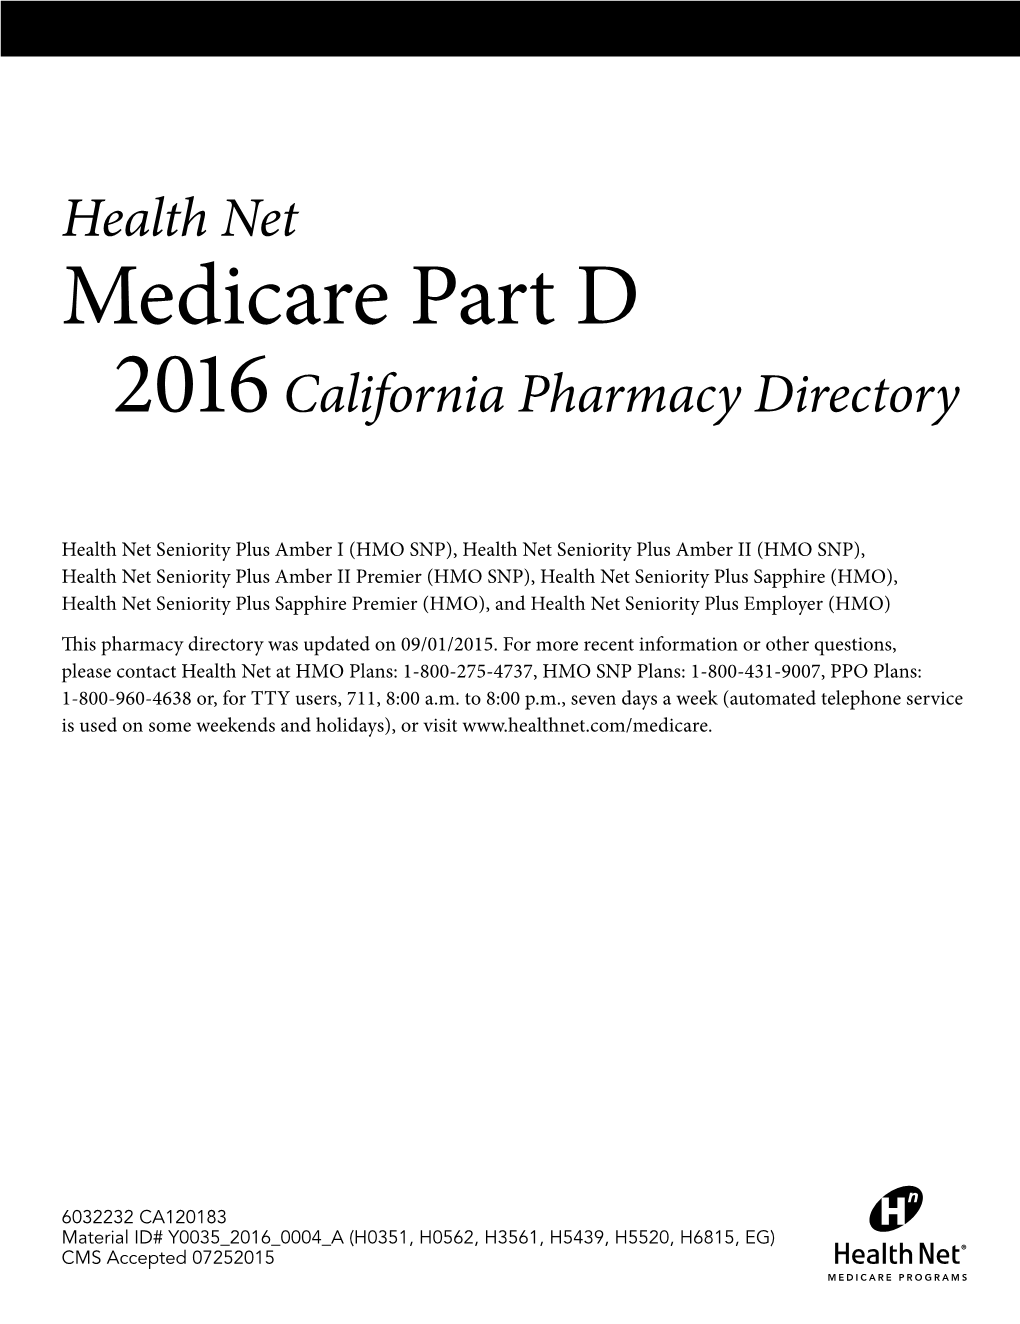 Medicare Part D 2016 California Pharmacy Directory